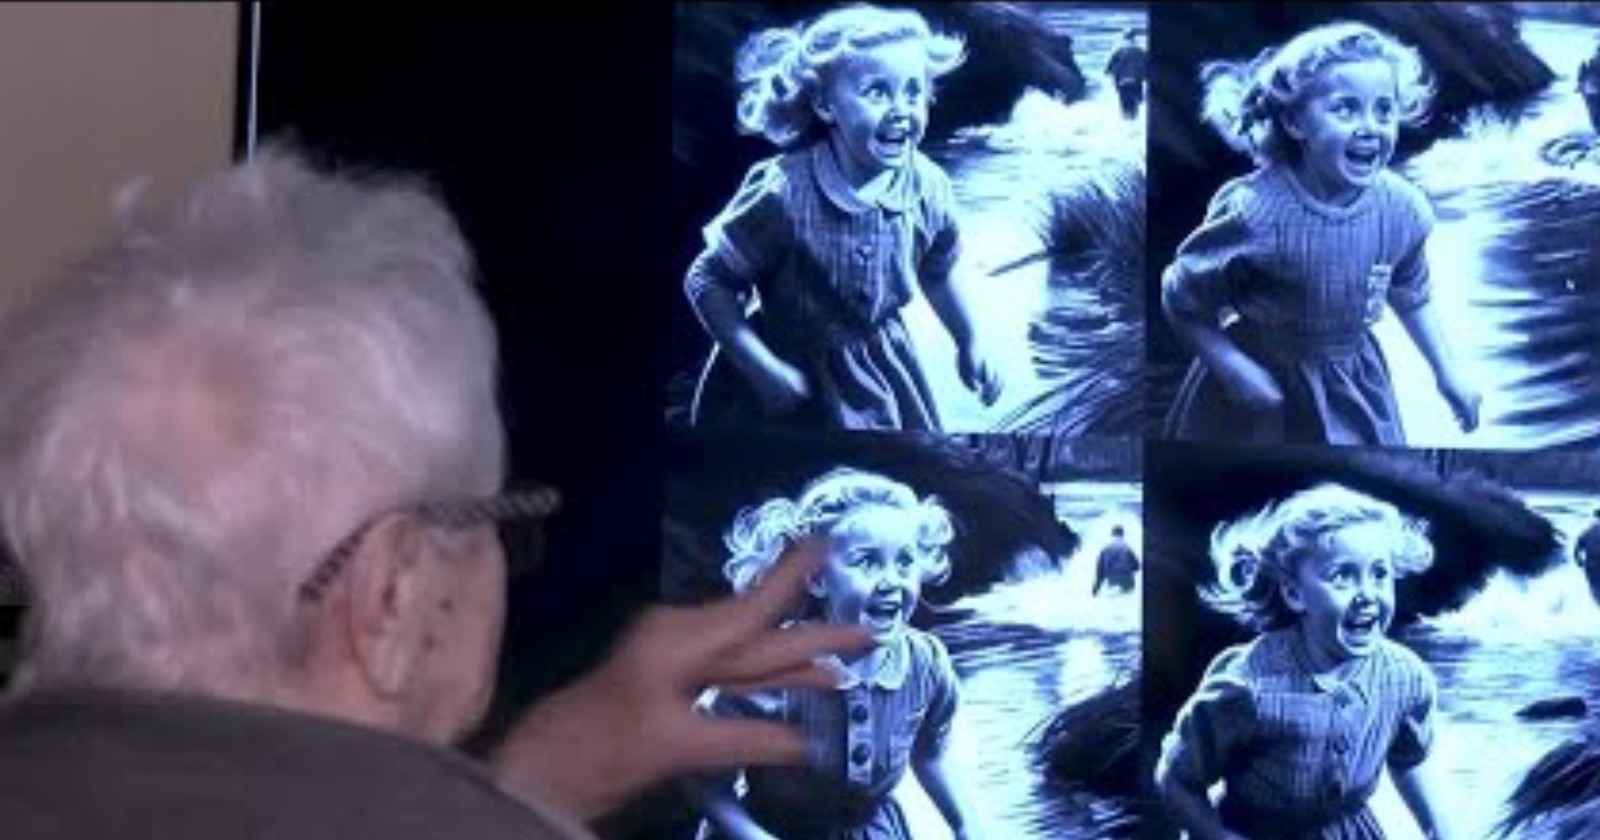  holocaust survivors use generate photos their memories 